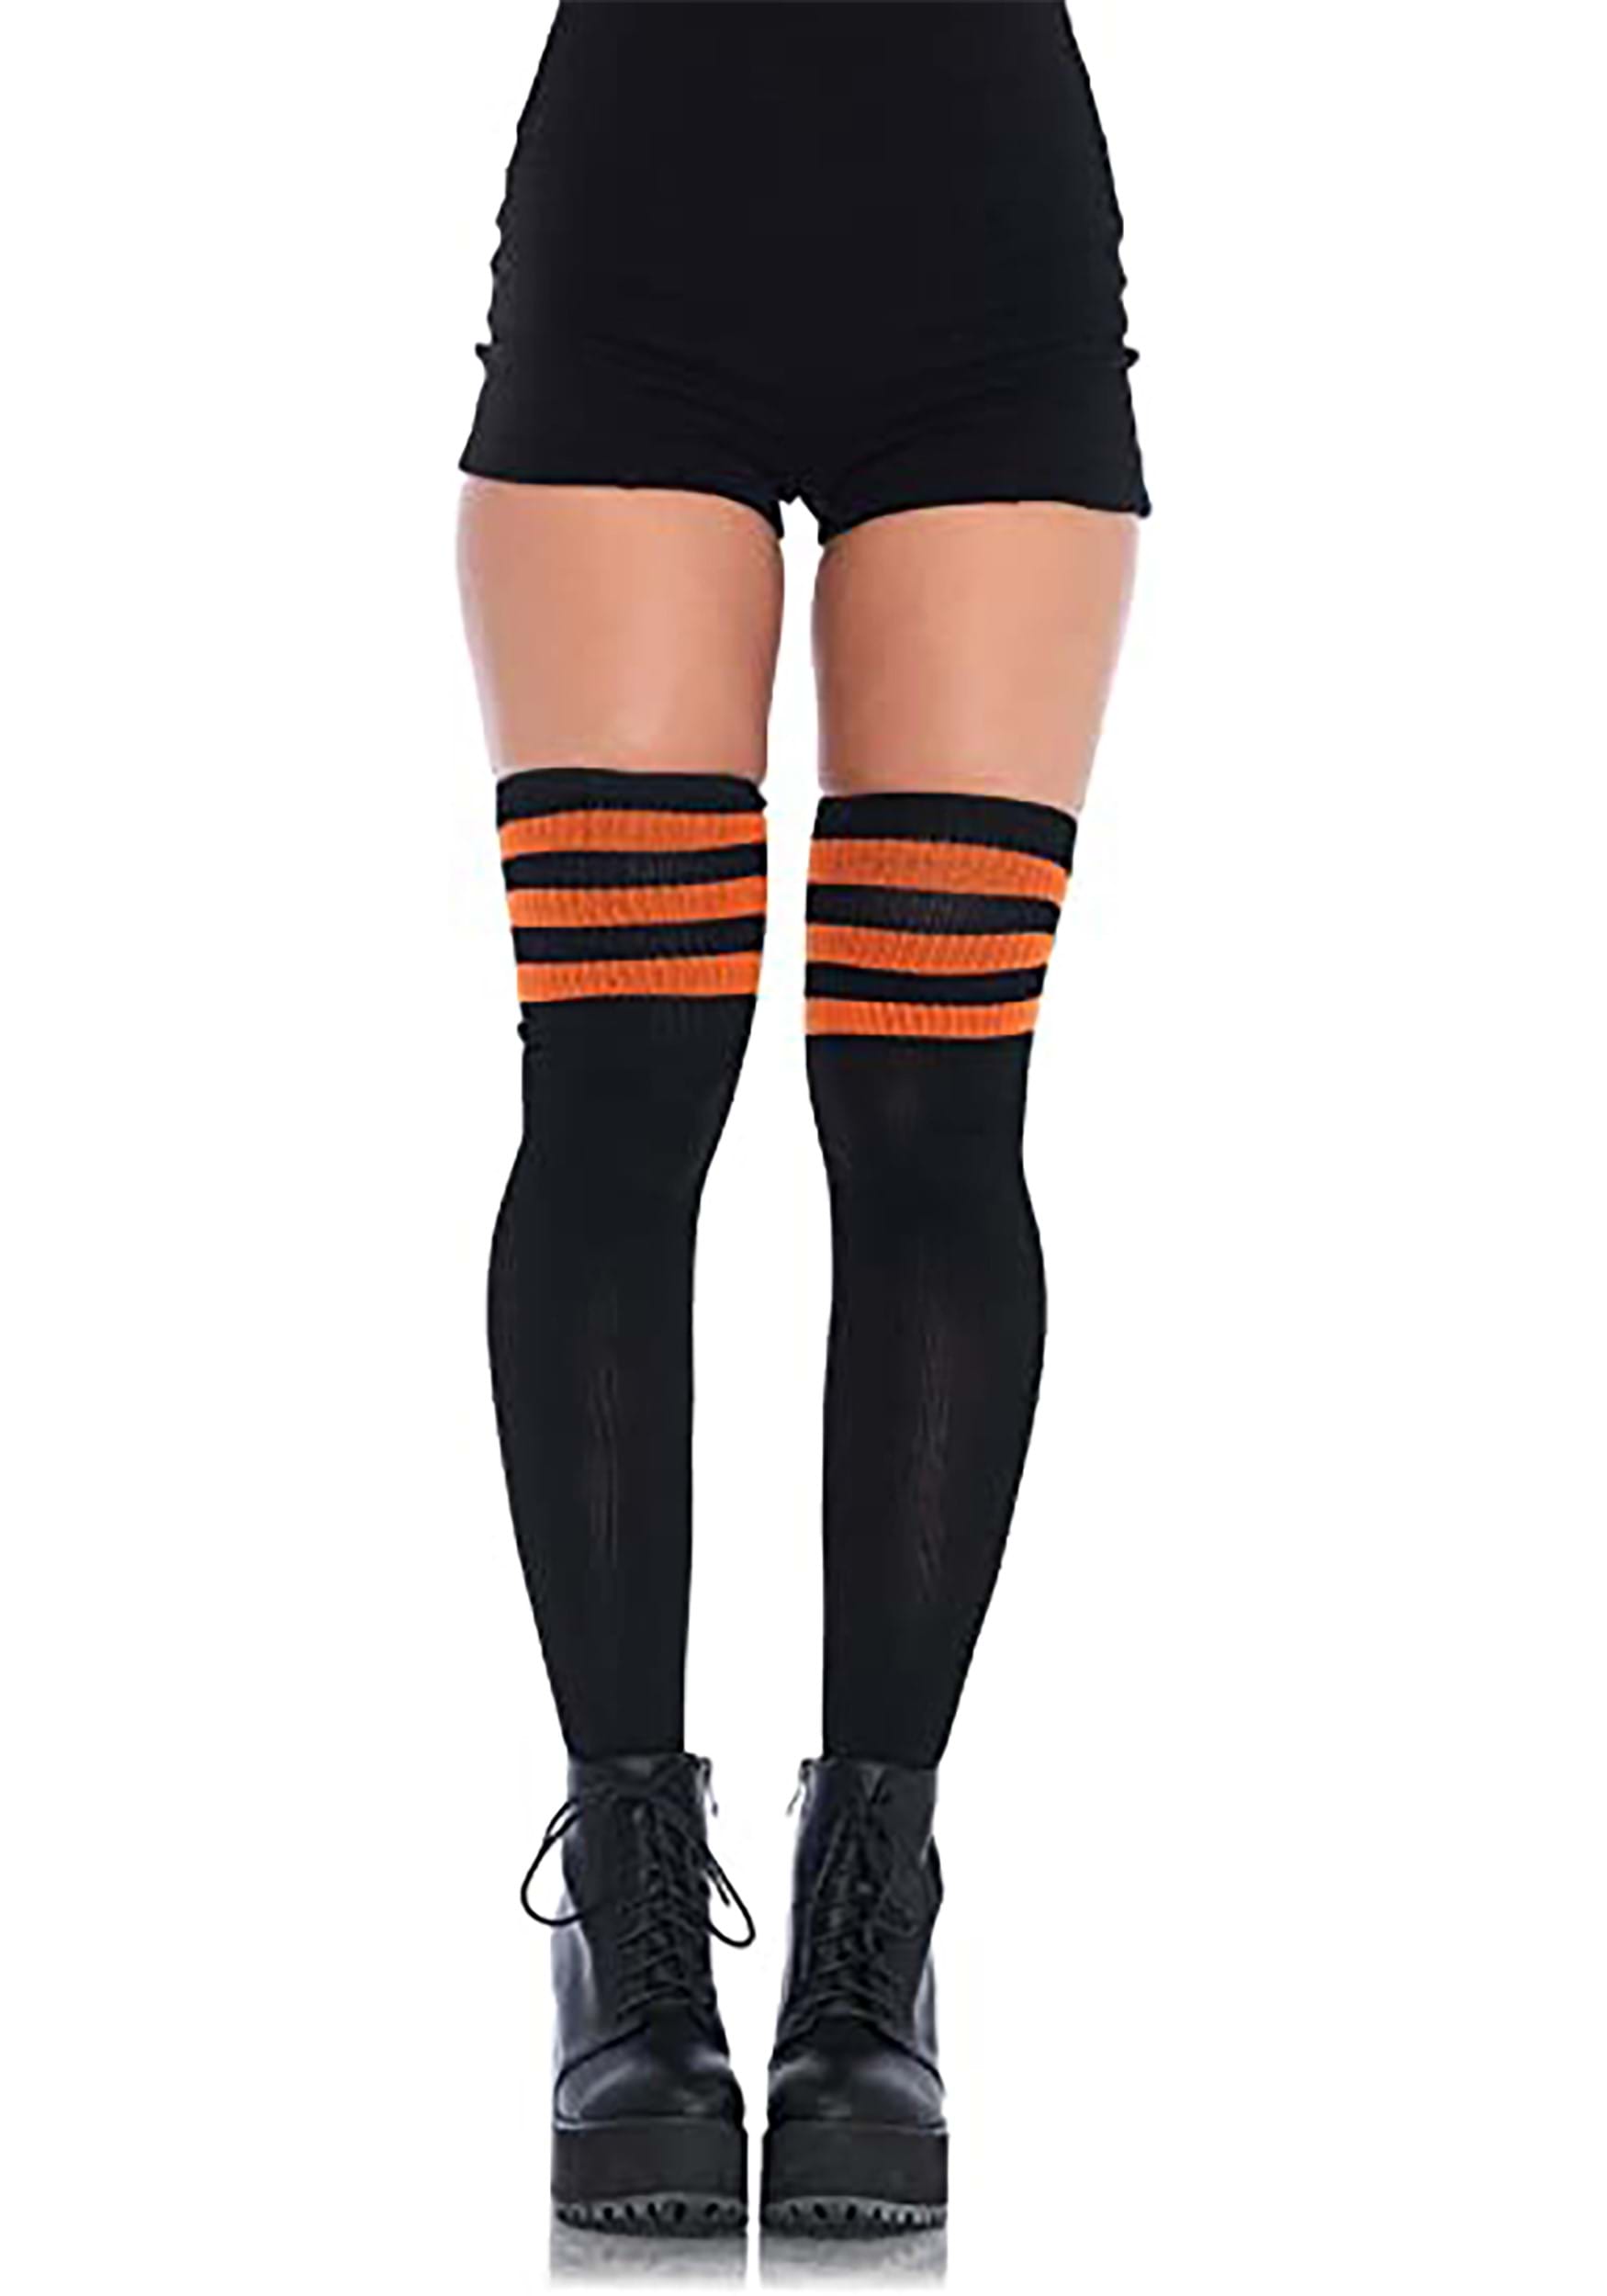 Gina Athletic Thigh High Stockings, Women's Socks